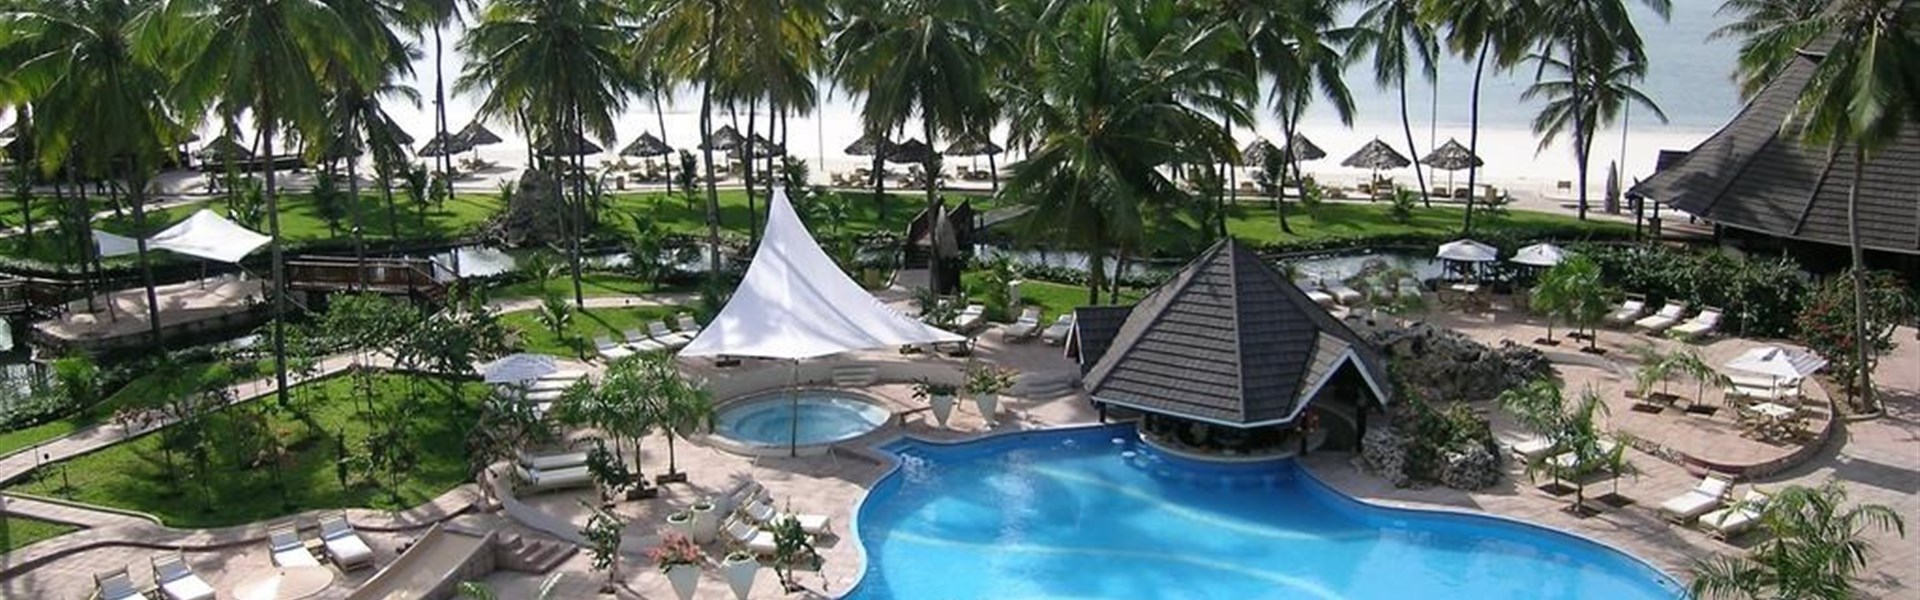 Marco Polo - Diani Reef Beach Resort - 